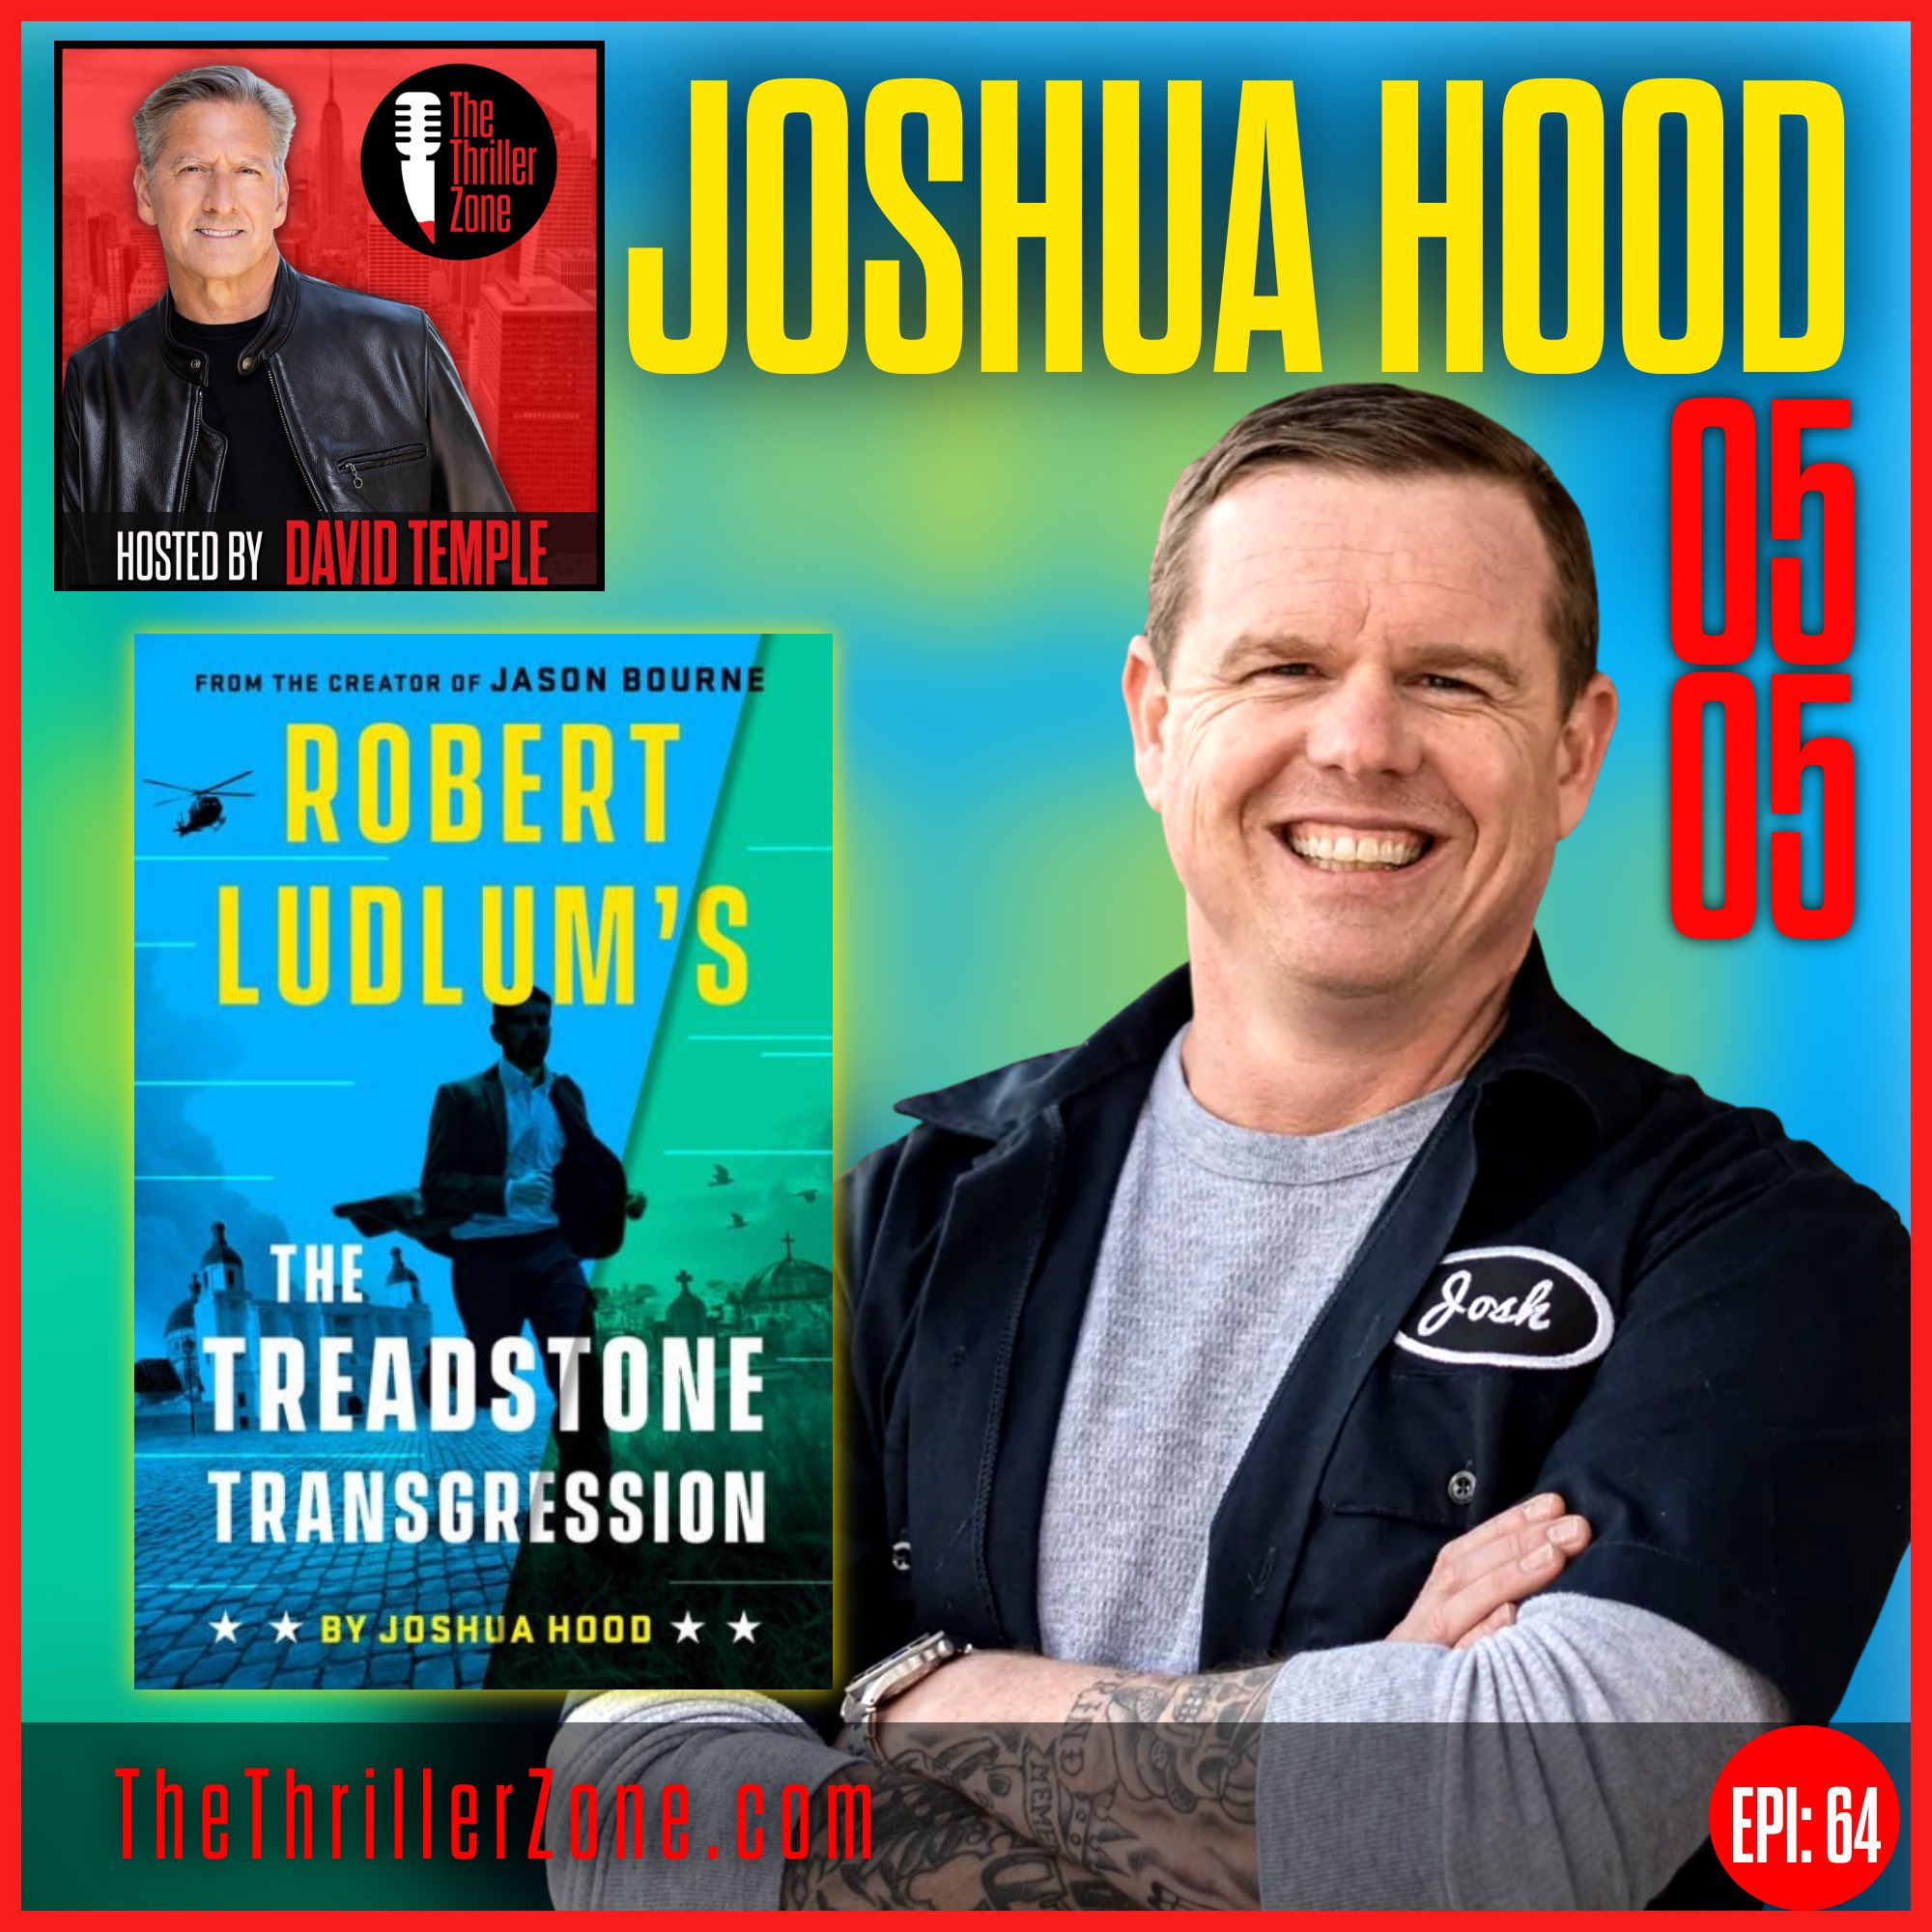 Joshua Hood, author of The Treadstone Transgression